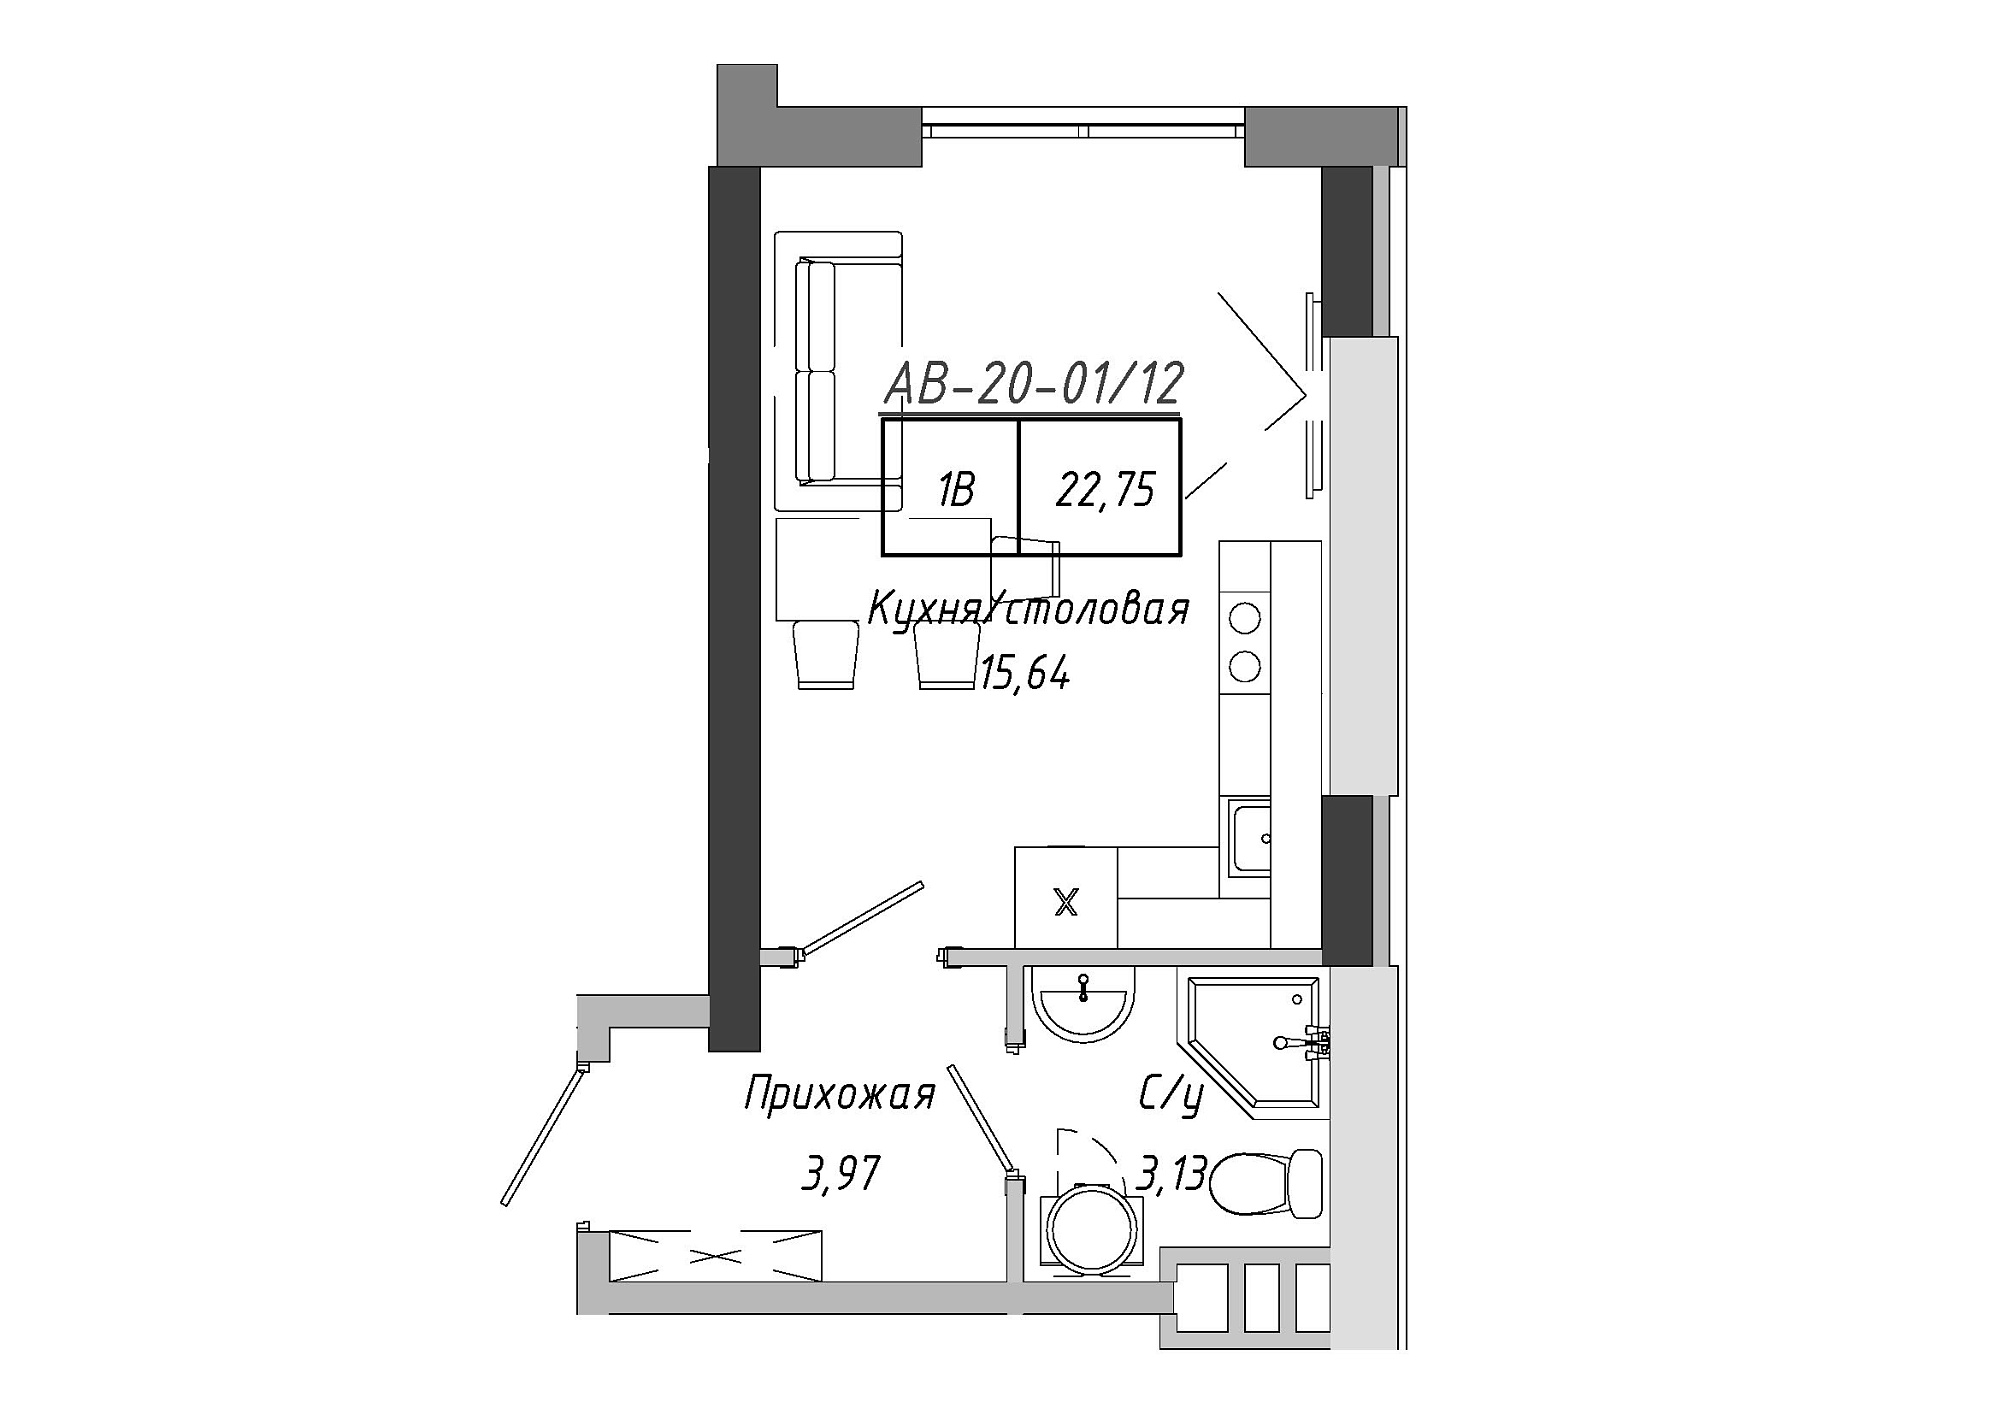 Planning Smart flats area 22.75m2, AB-20-01/00012.